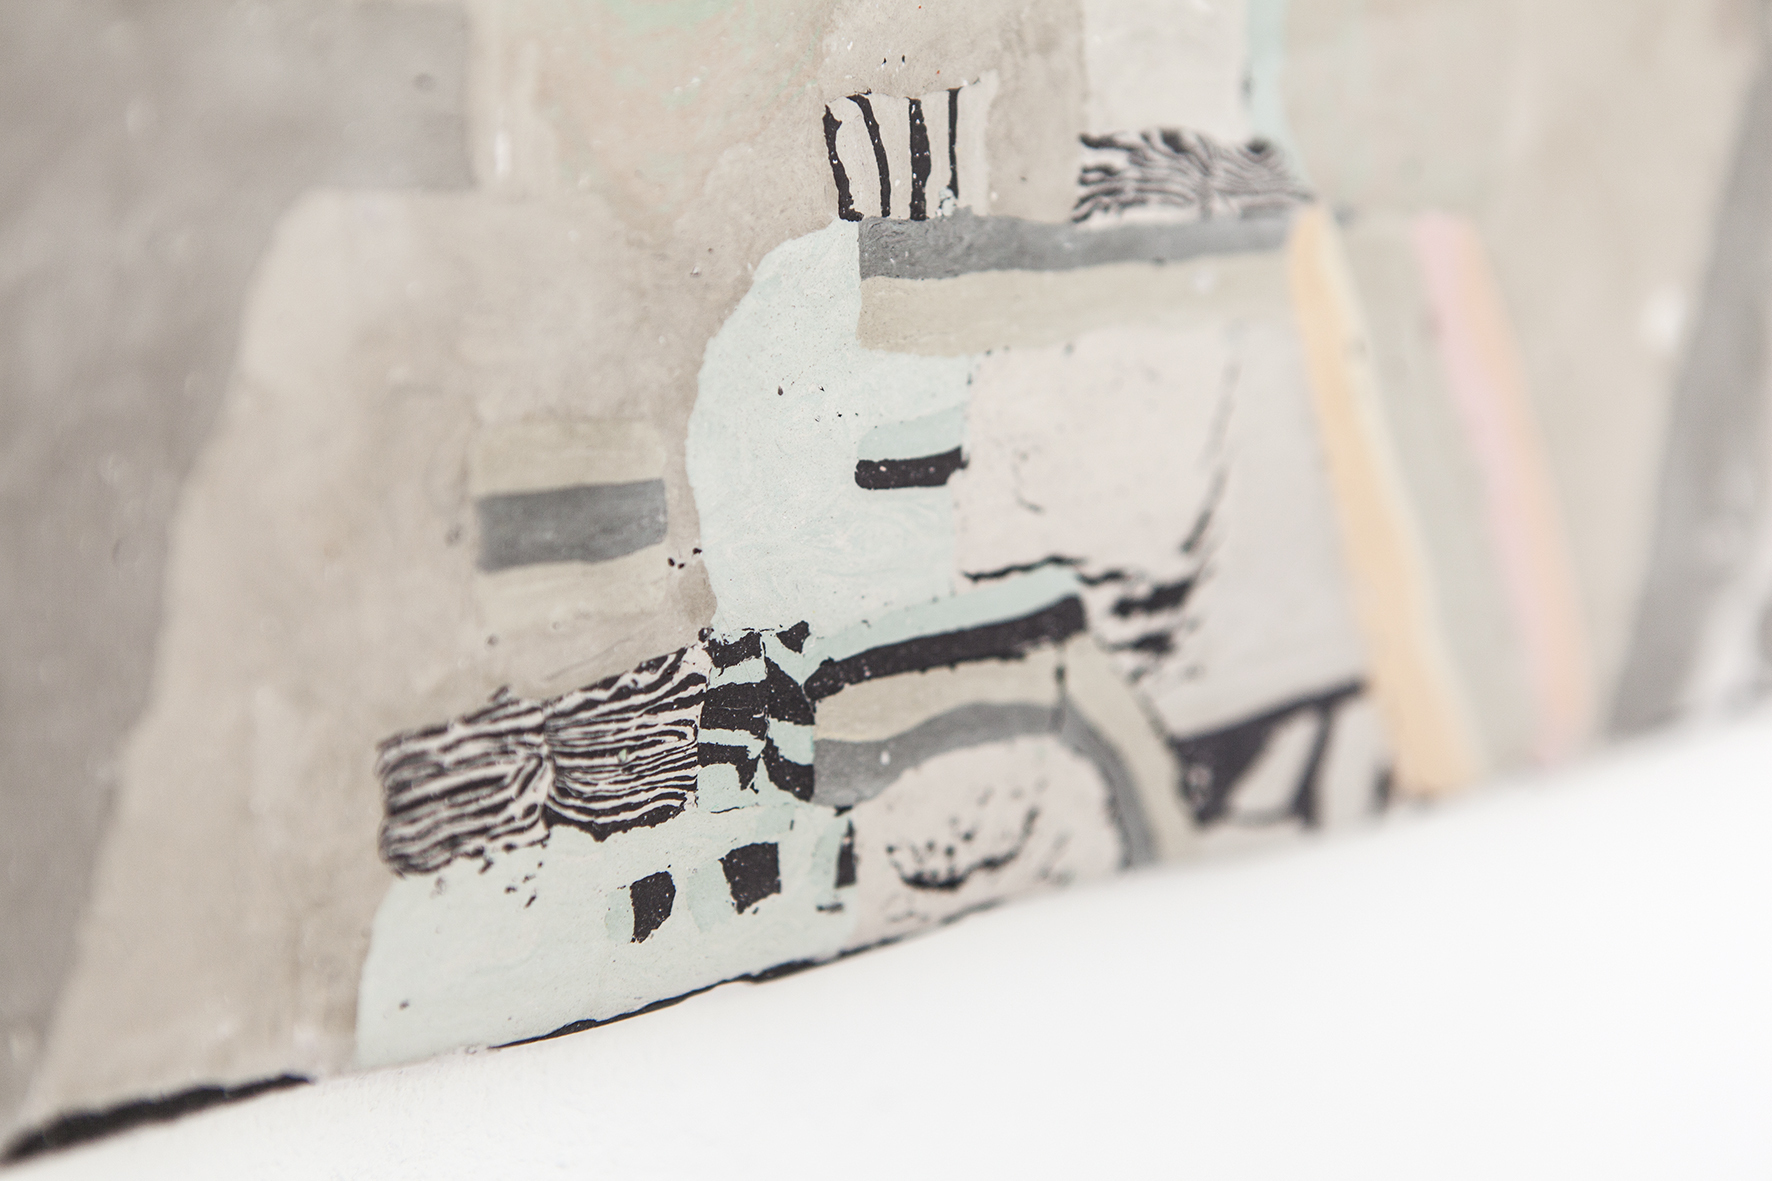 Heti Prack, Friedl (detail), 2021, 57 x 42 cm, Gypsum, pigments, bone glue